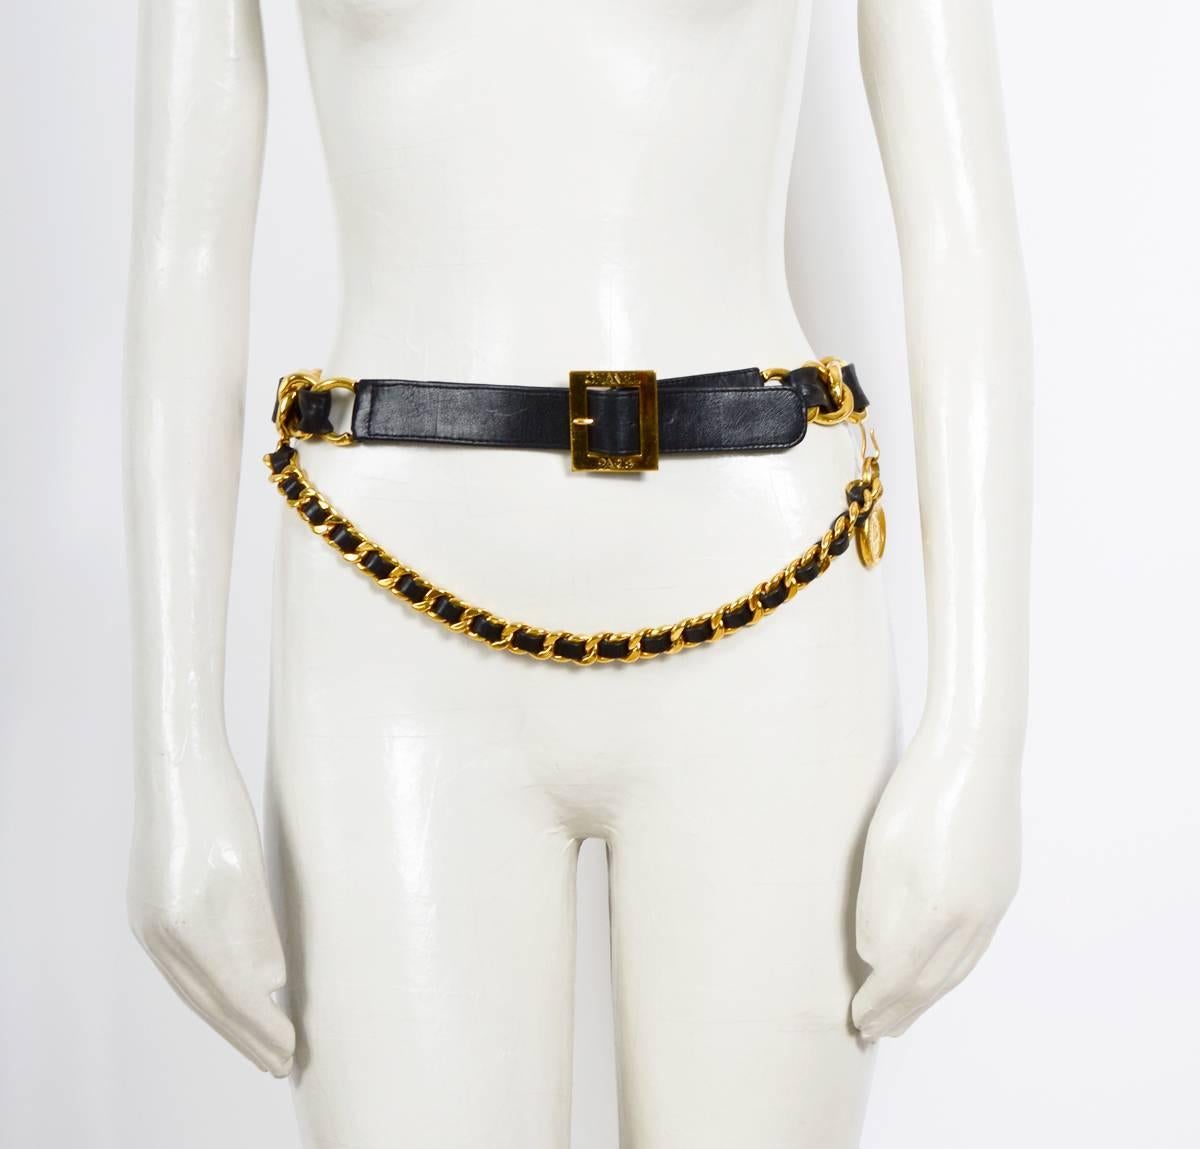 90s chain belt